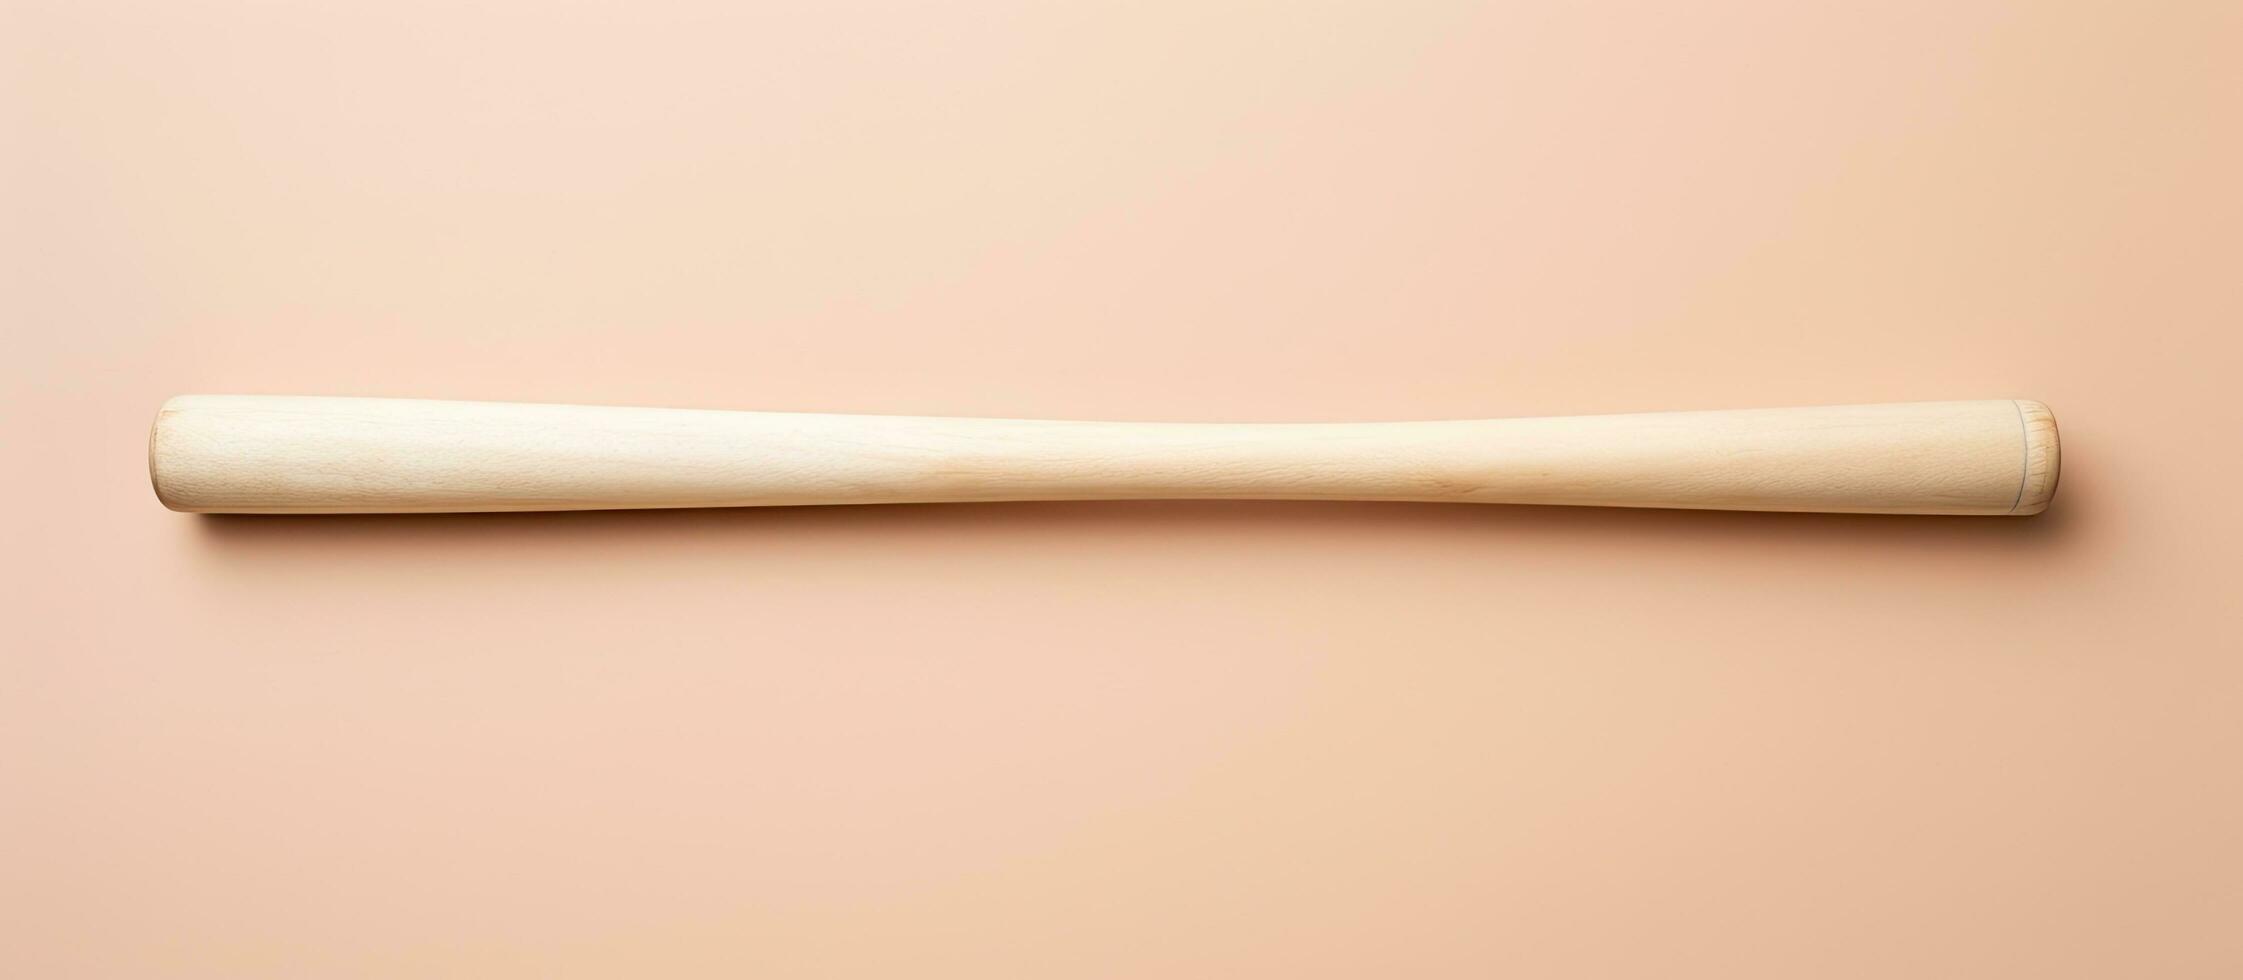 foto de un de madera béisbol murciélago en contra un vibrante rosado pared con vacío espacio para texto o diseño con Copiar espacio